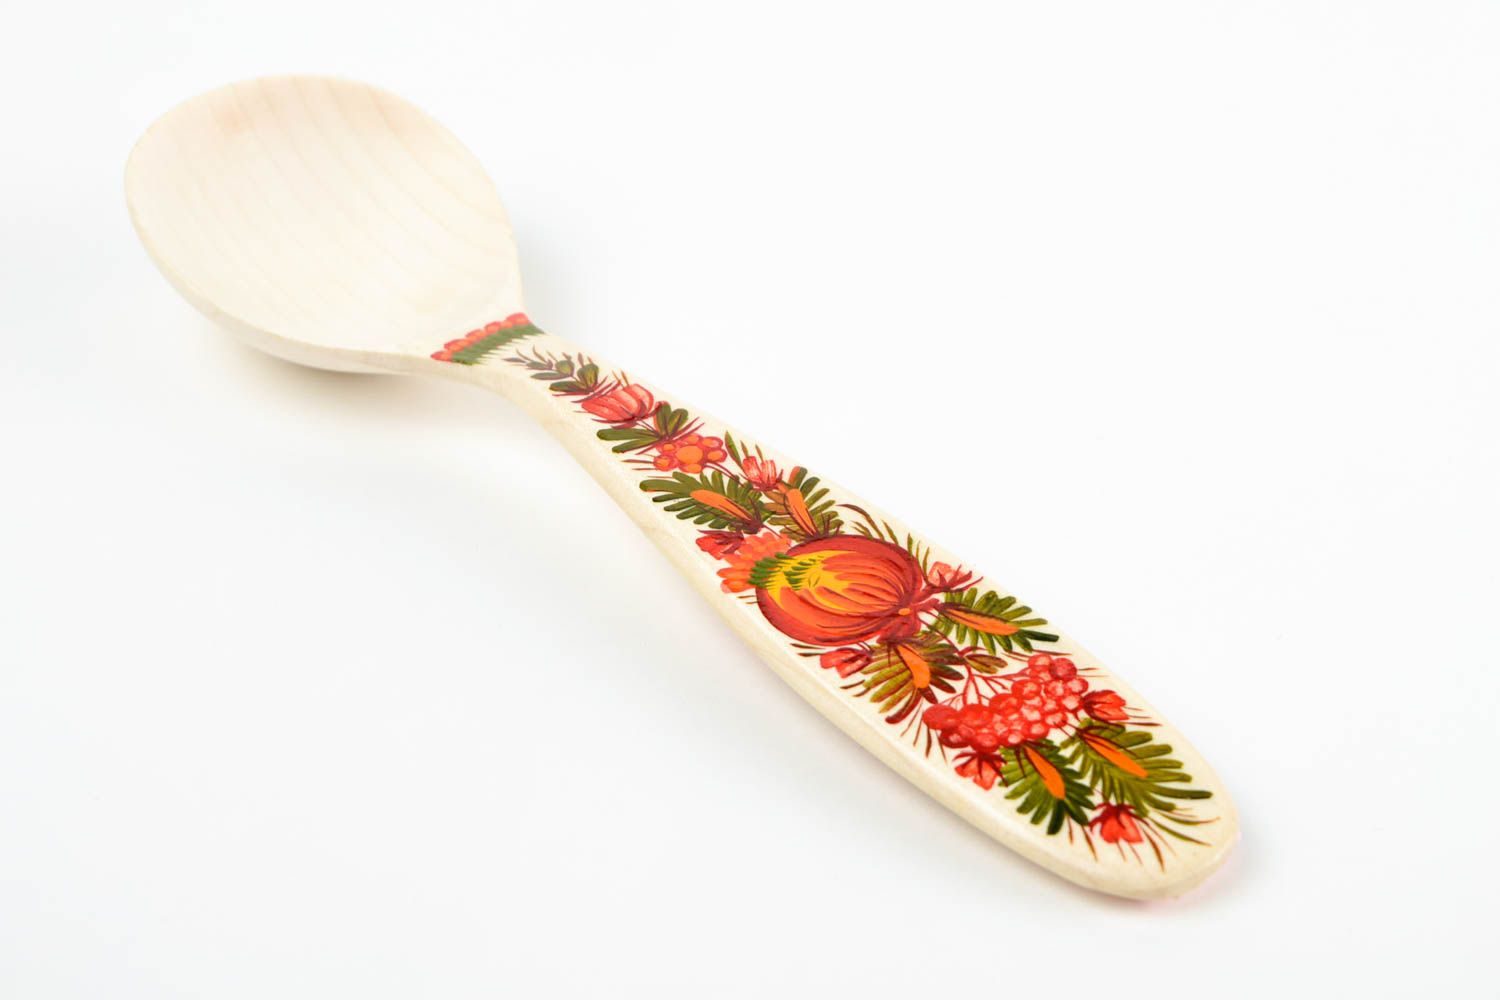 Cuchara de madera pintada a mano utensilio de cocina artesanal regalo original foto 4